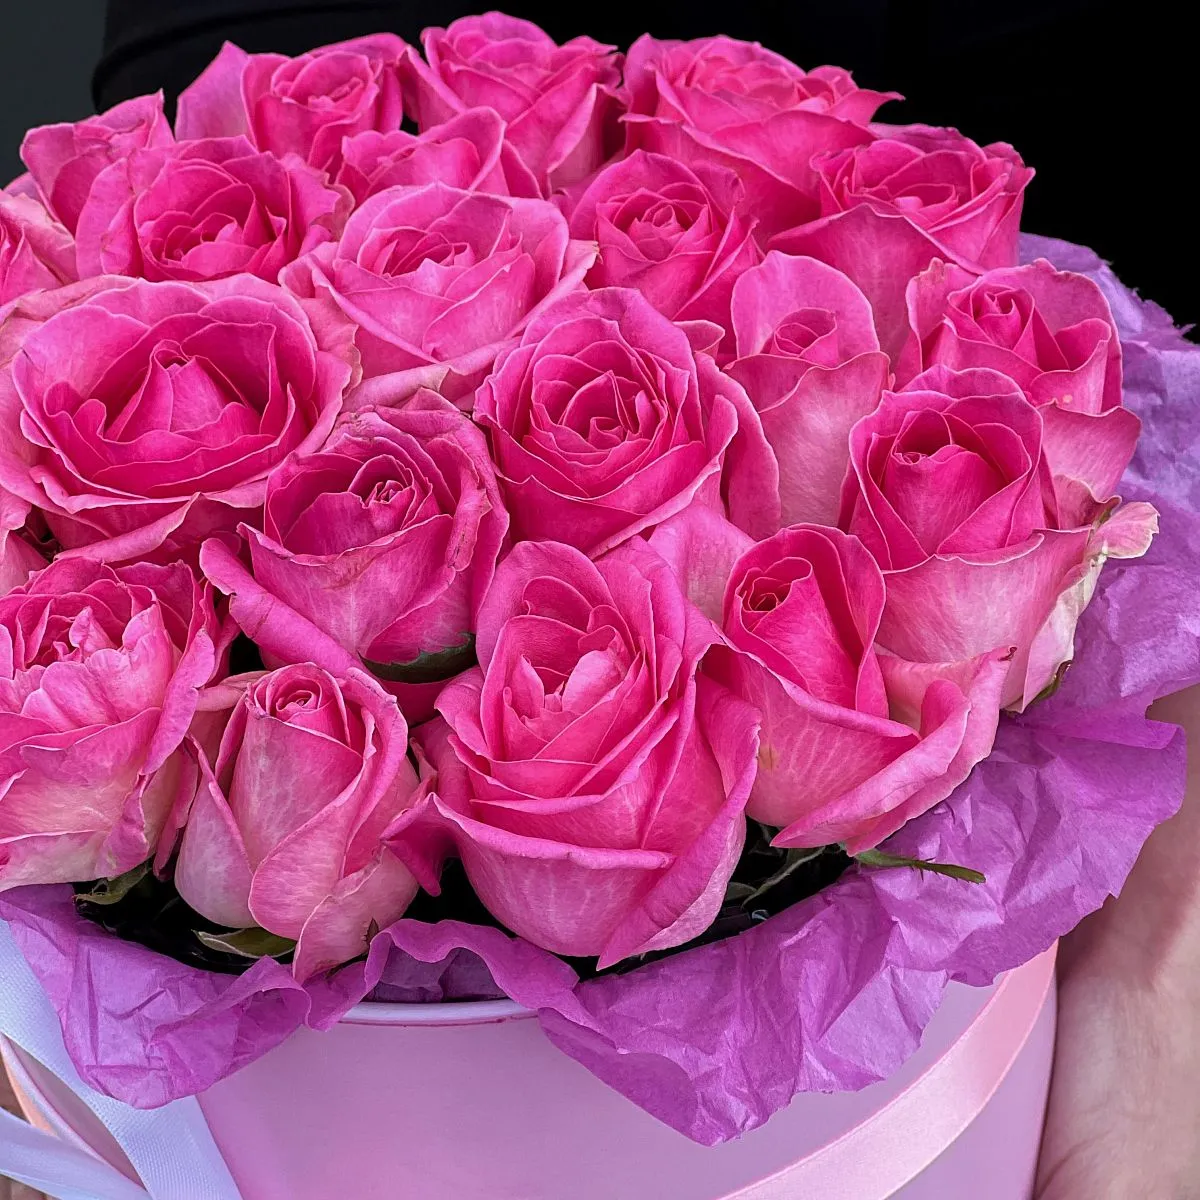 51 розовая роза (50 см)